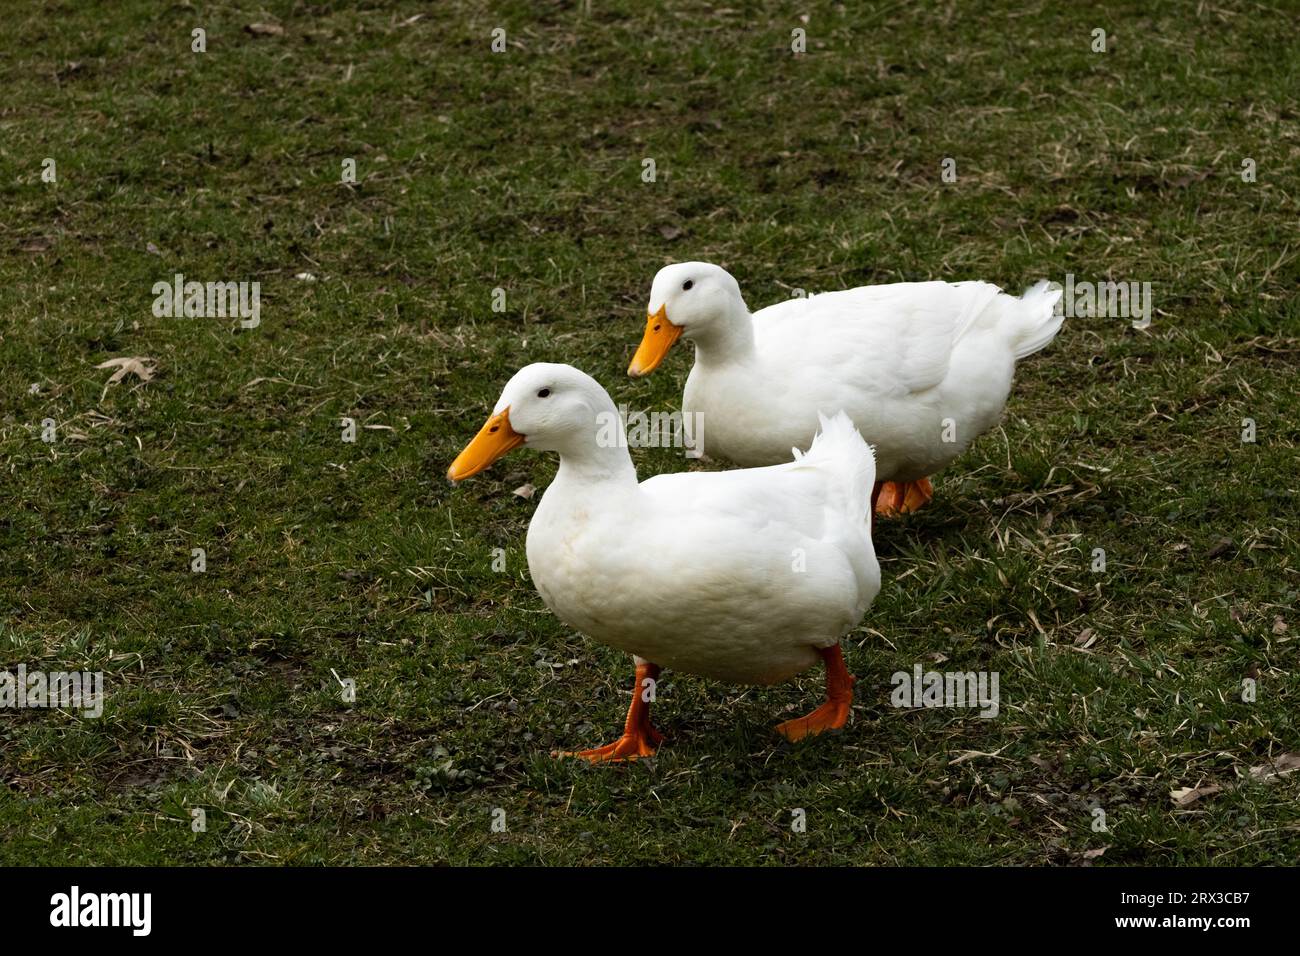 two ducks walking on grass Stock Photo